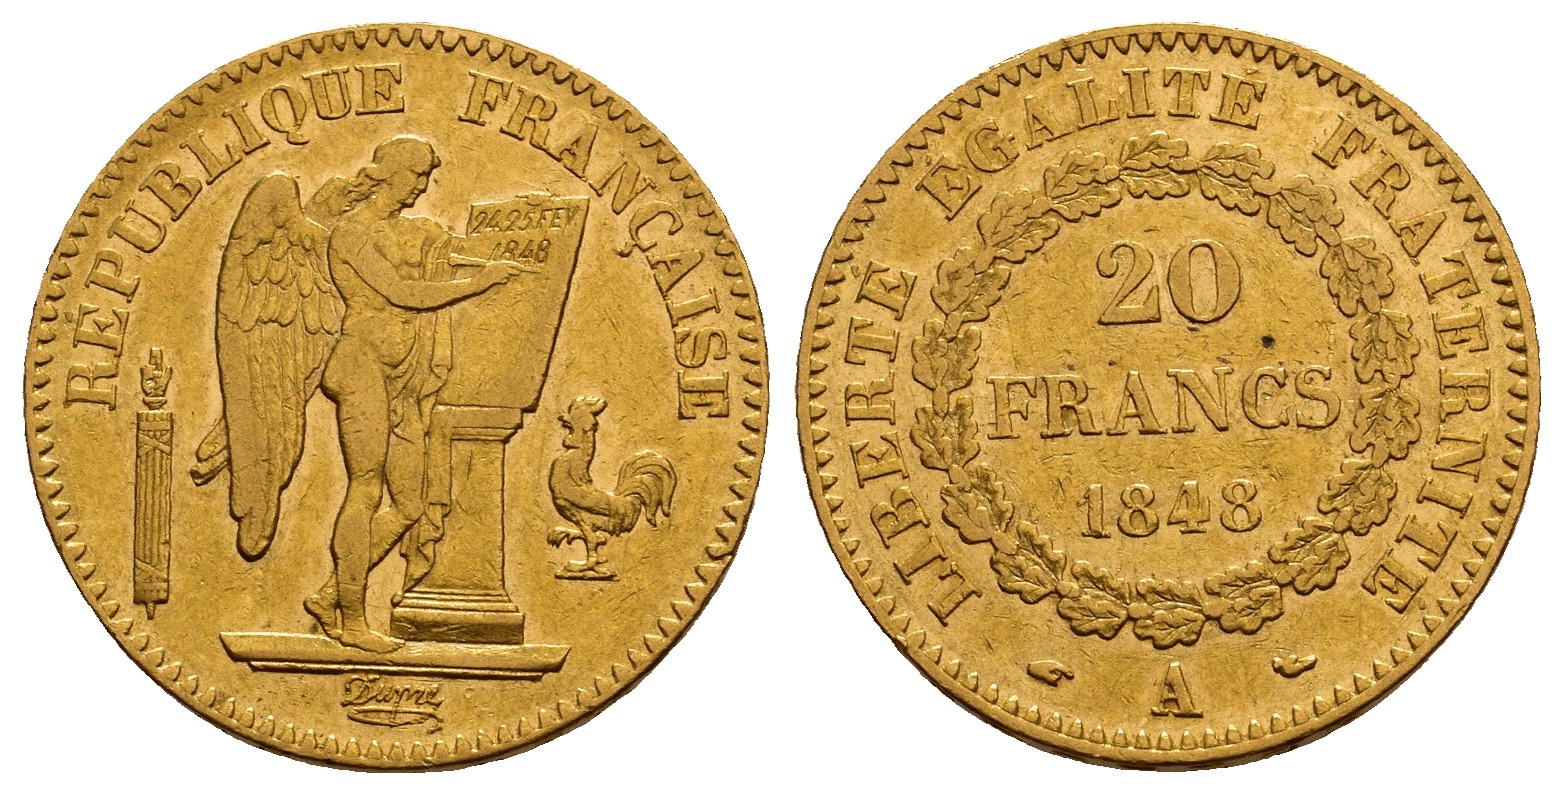 PEUS V 9762 Frankreich 5,81 g Feingold 20 Francs GOLD 1848 A Sehr schön